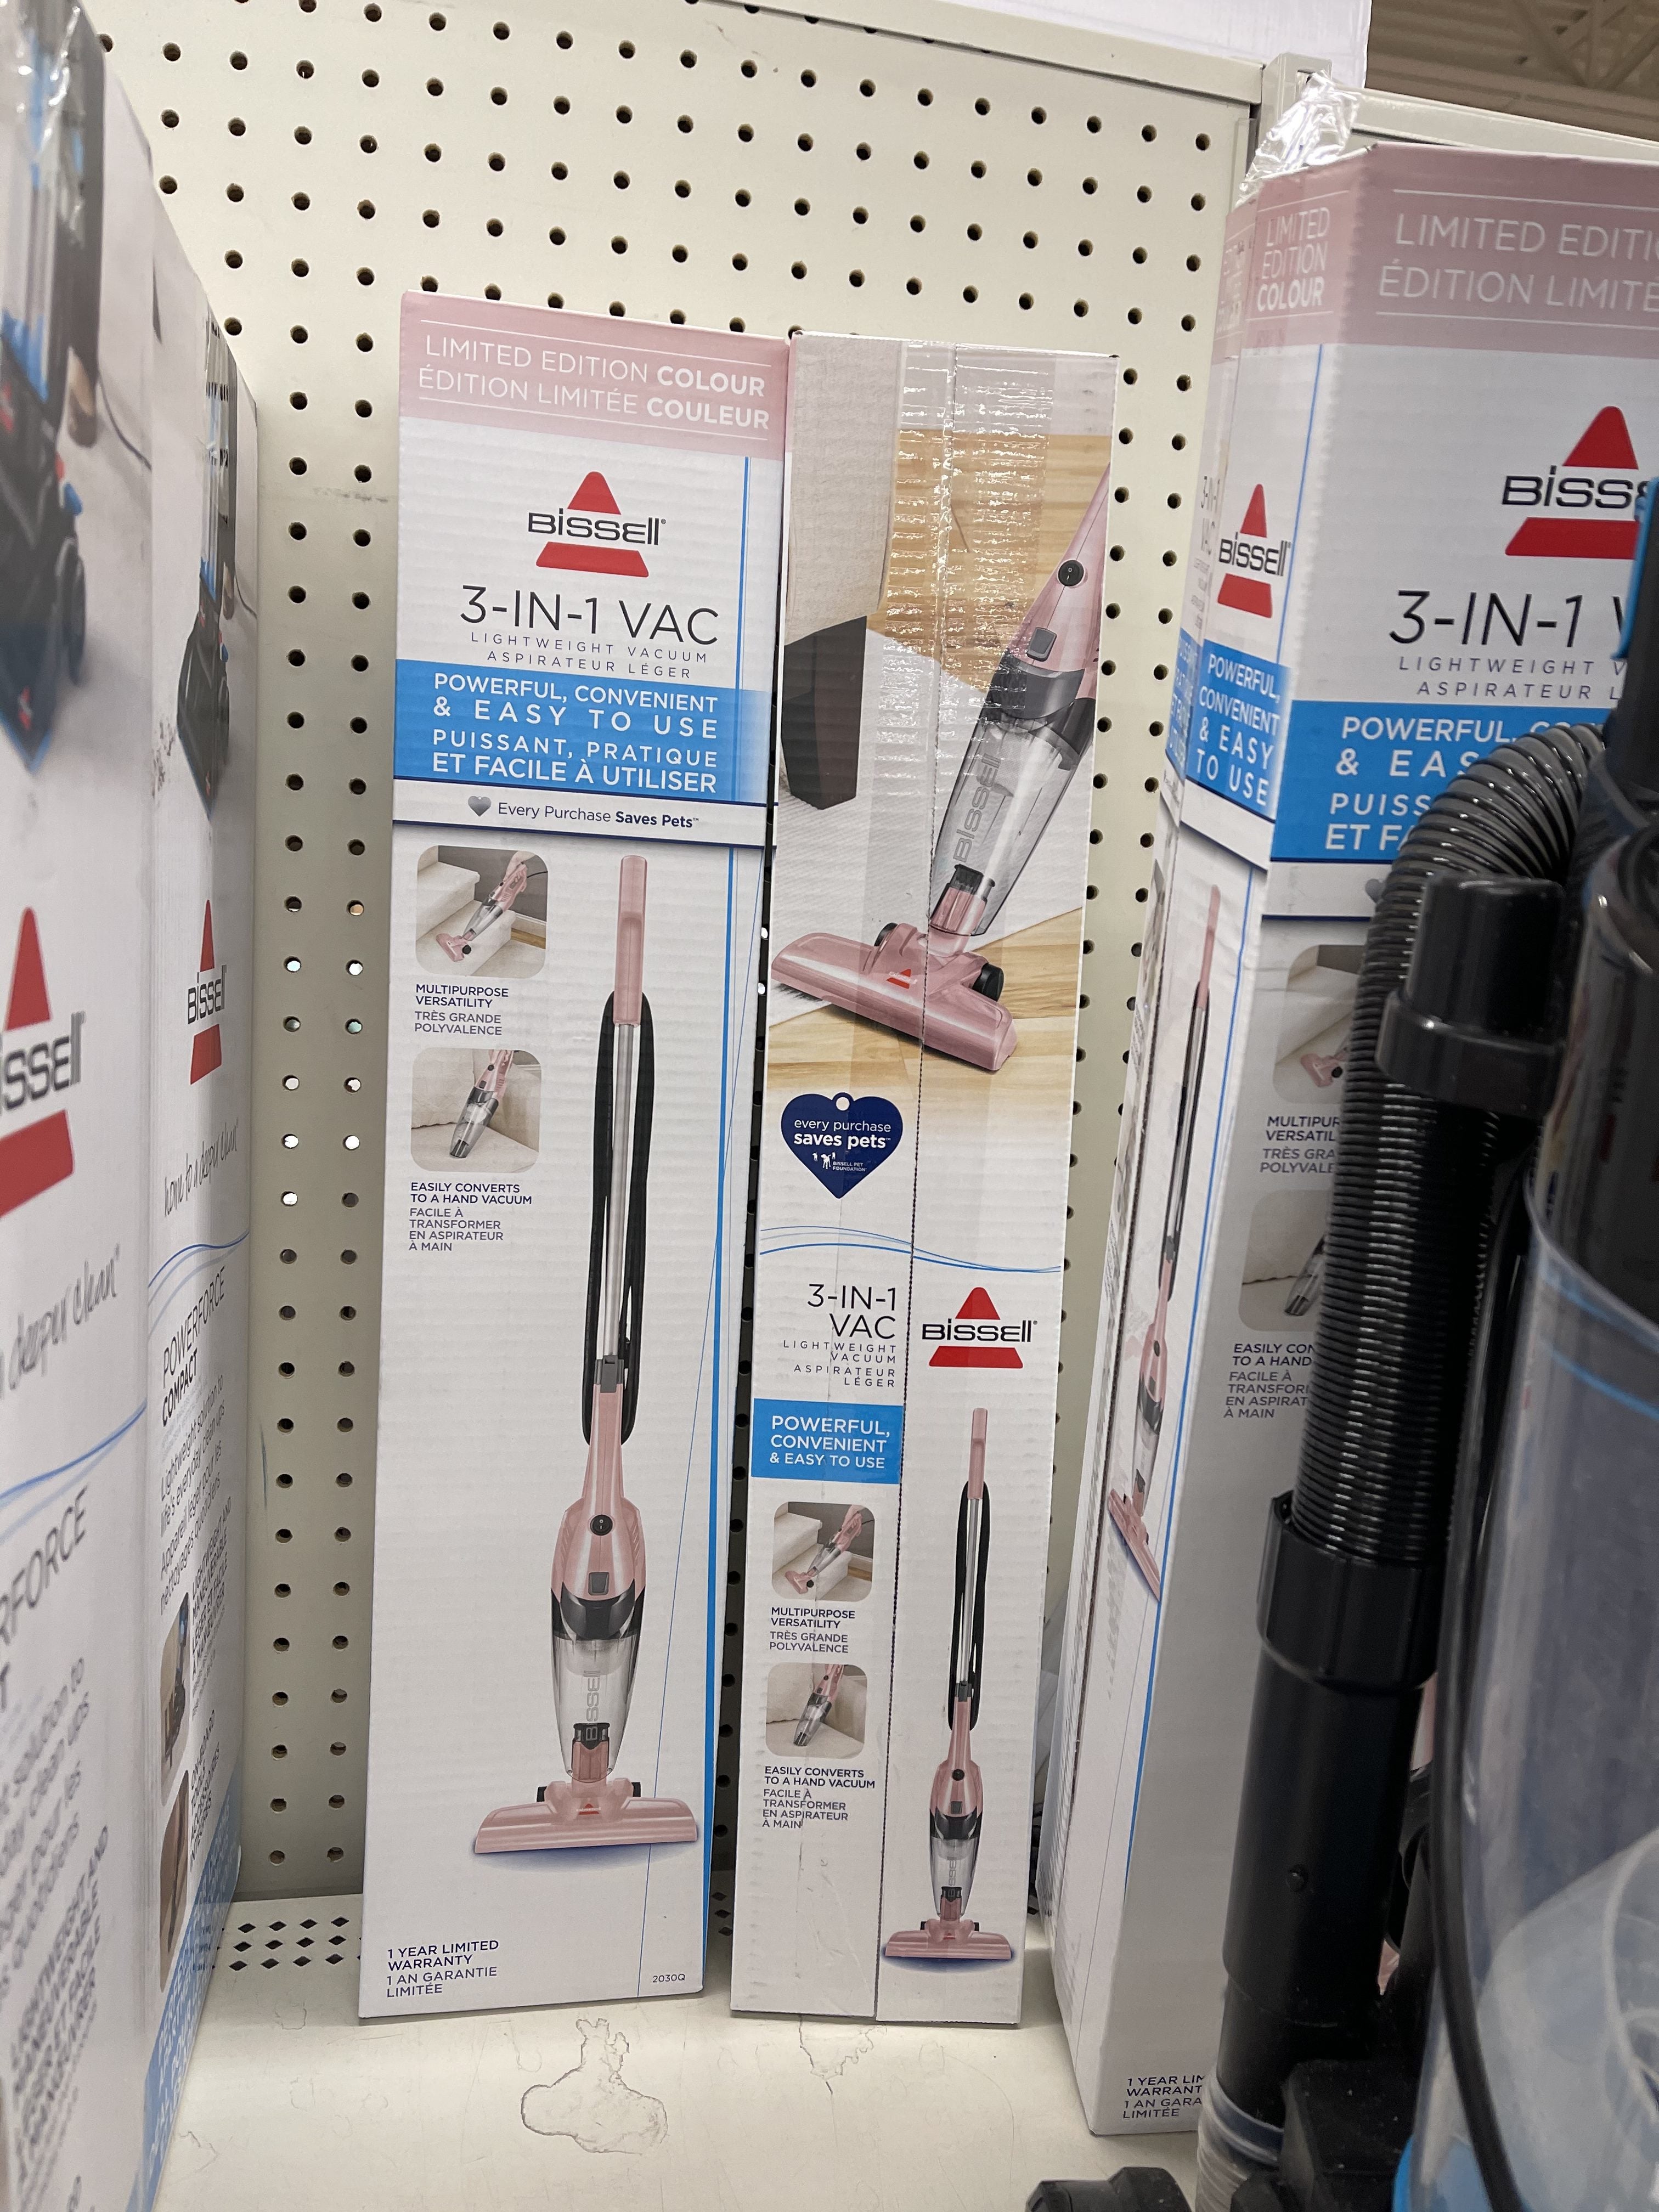 Walmart] $9 Bissell 3-in-1 Lightweight Stick Vacuum (reg $29.98) - Page 2 -  RedFlagDeals.com Forums